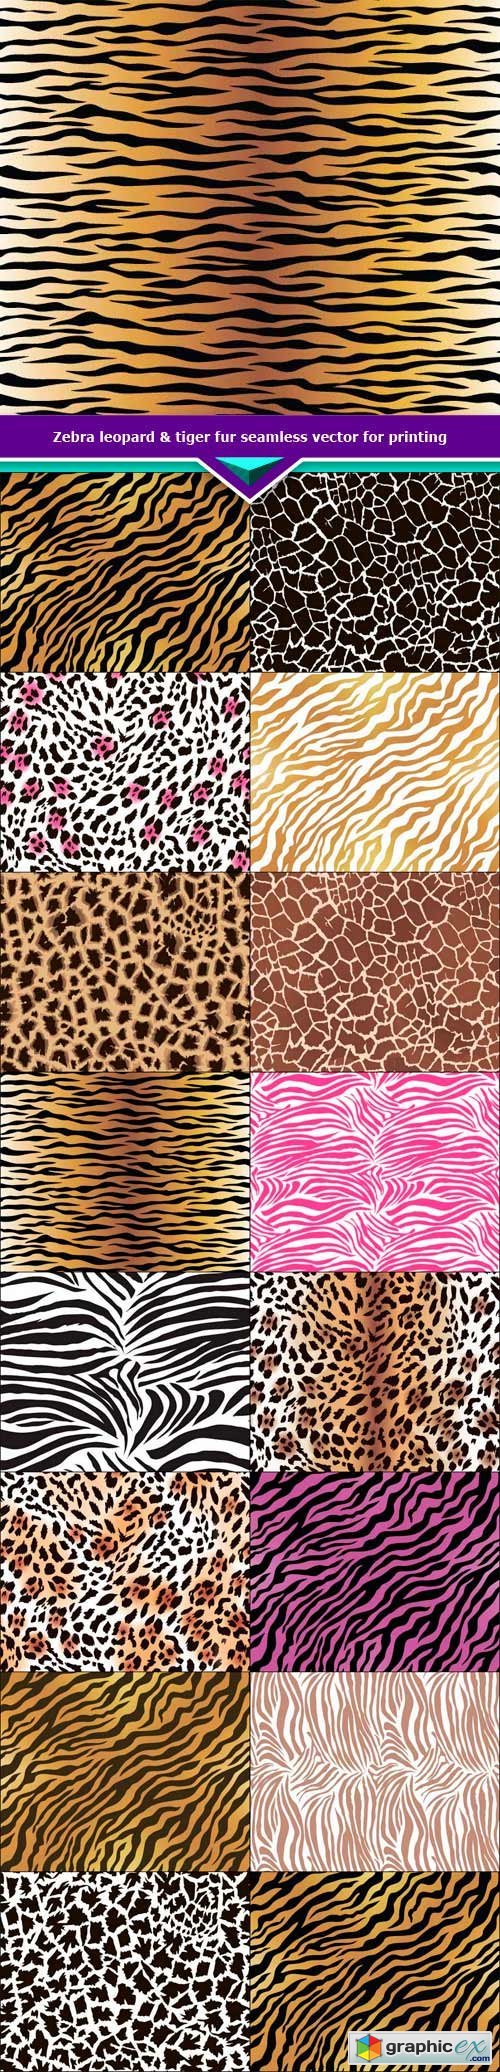 Zebra leopard & tiger fur seamless vector for printing 15x EPS